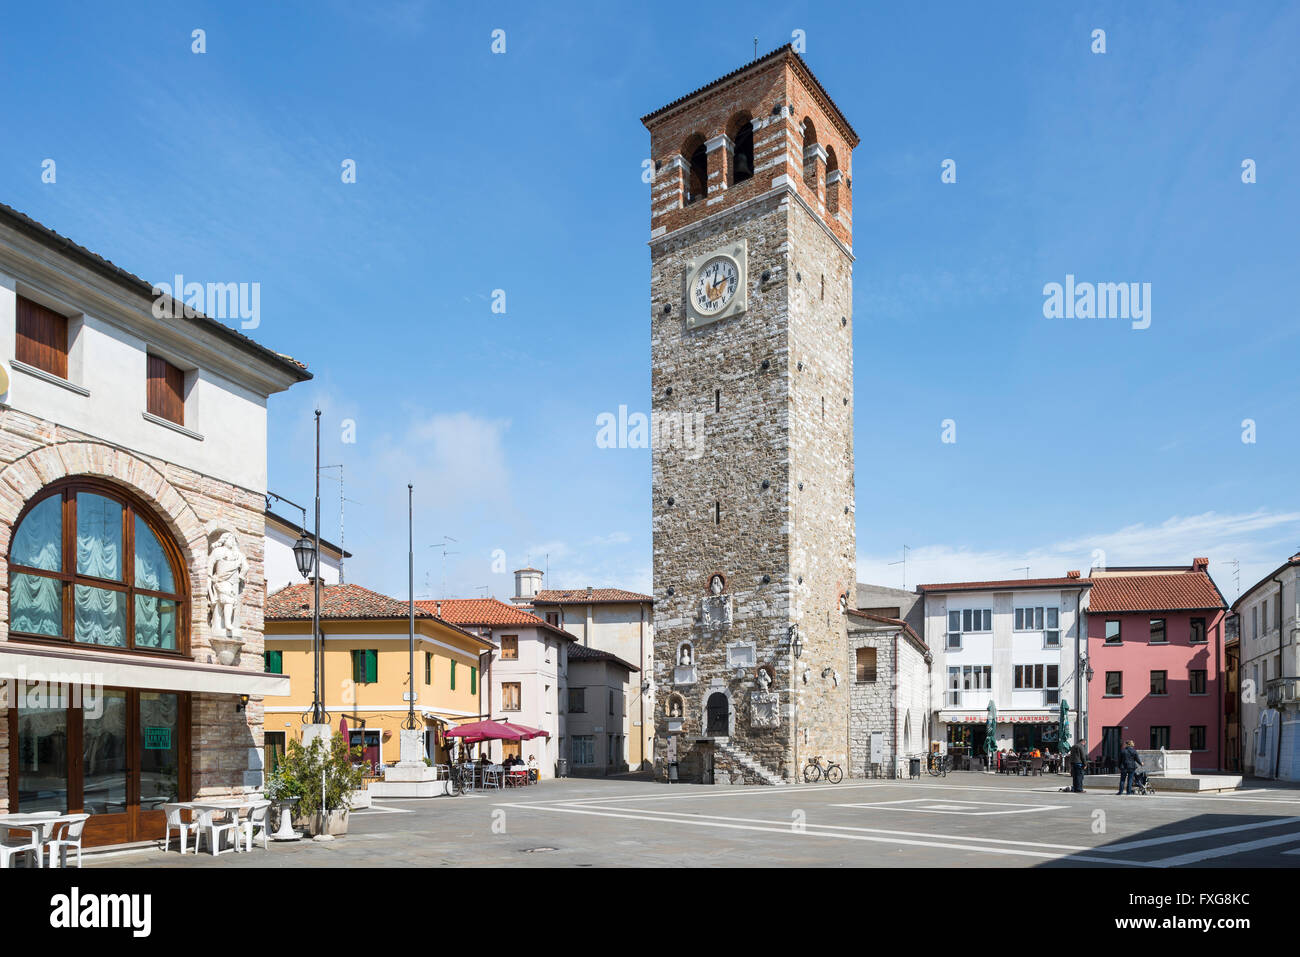 Town square with clock tower, Piazza Vittorio Emanuele, Marano Lagunare, Udine, Friuli-Venezia Giulia, Italy Stock Photo